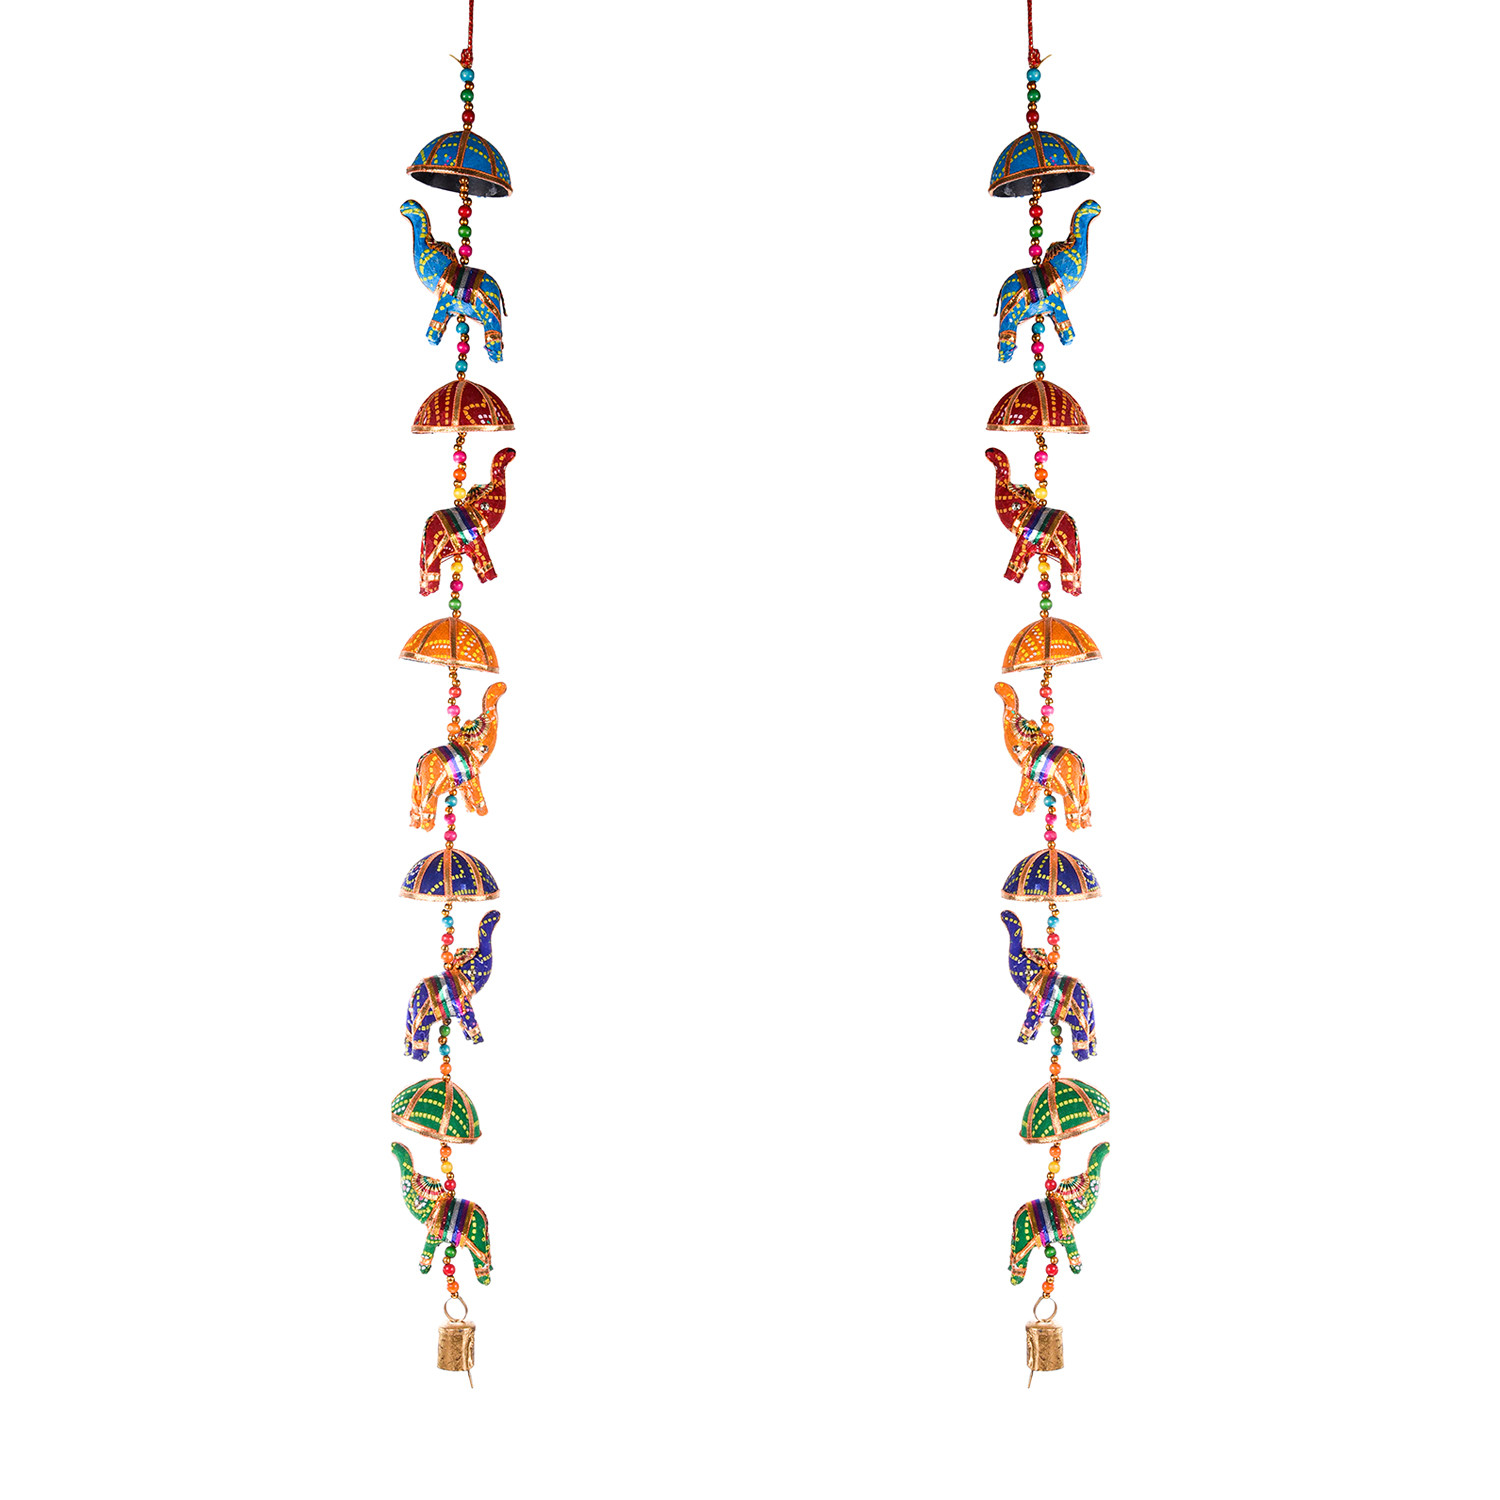 Kuber Industries Rajasthani Traditional Windchimes|5 Hanging Umbrella & Elephants|Polyester Handcrafted Latkan|Decorative Door Hanging Latkan (Multicolor)